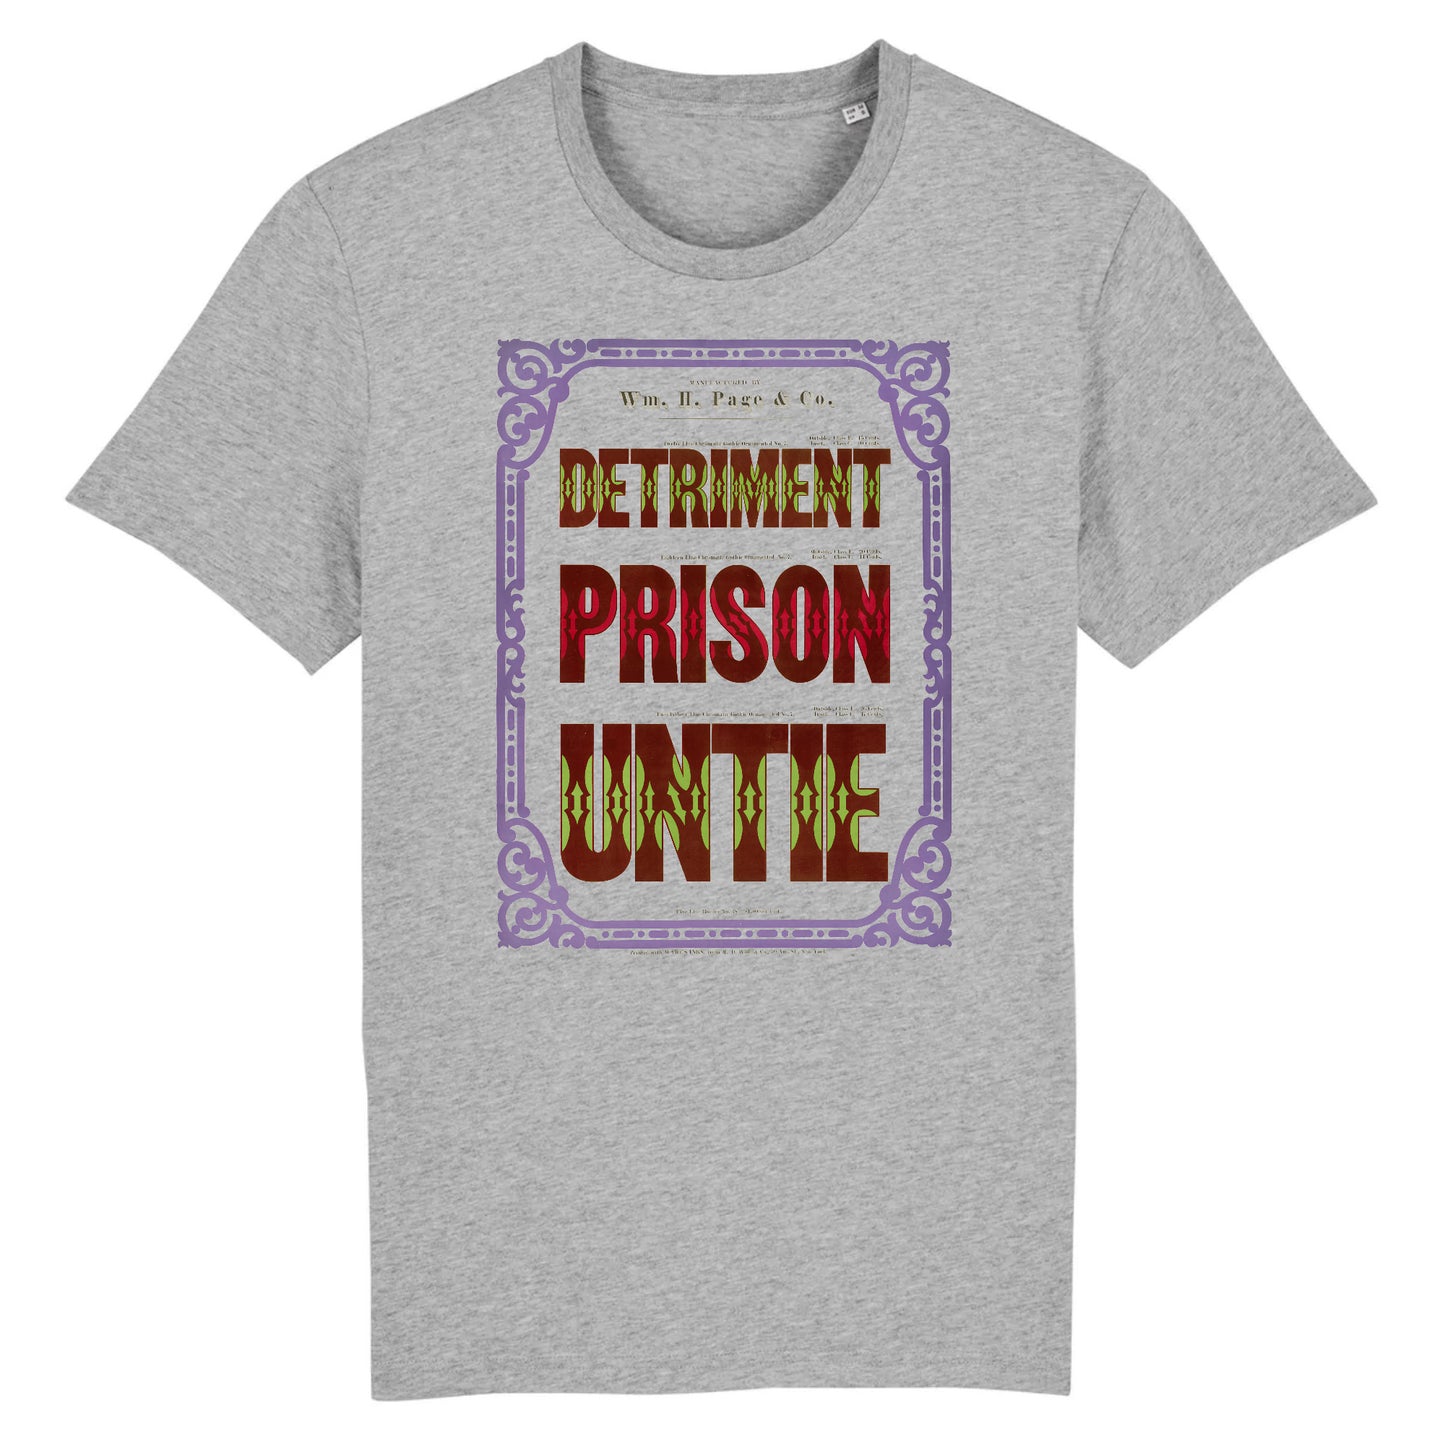 DETRIMENT, PRISON, UNITE, Specimens of Chromatic Wood Type by Wm. H. Page & Co., 1874 - Organic Cotton T-Shirt